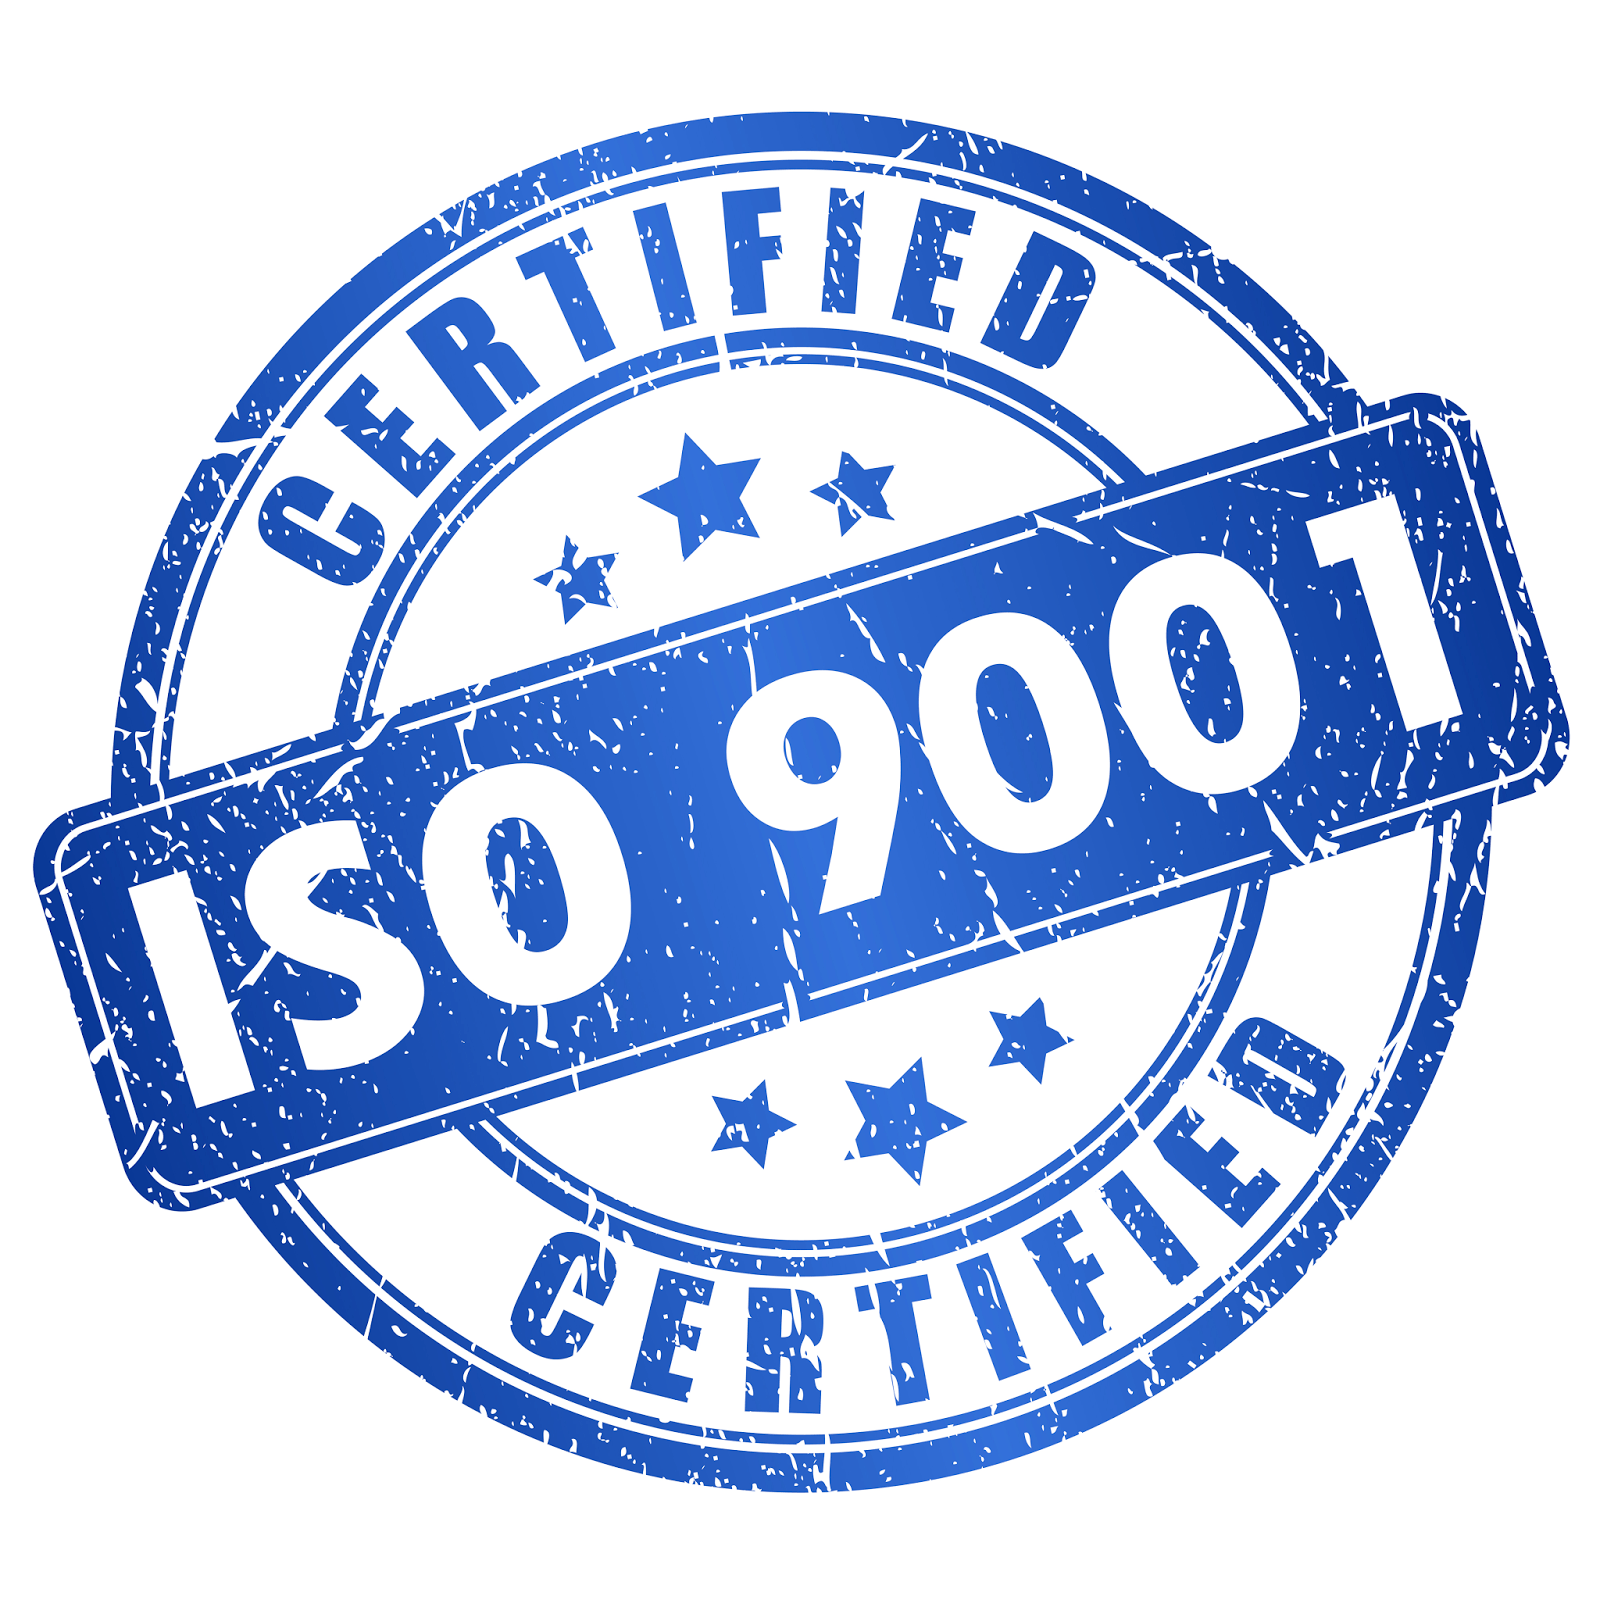 Certified Logo - Iso 9001 certification Logos